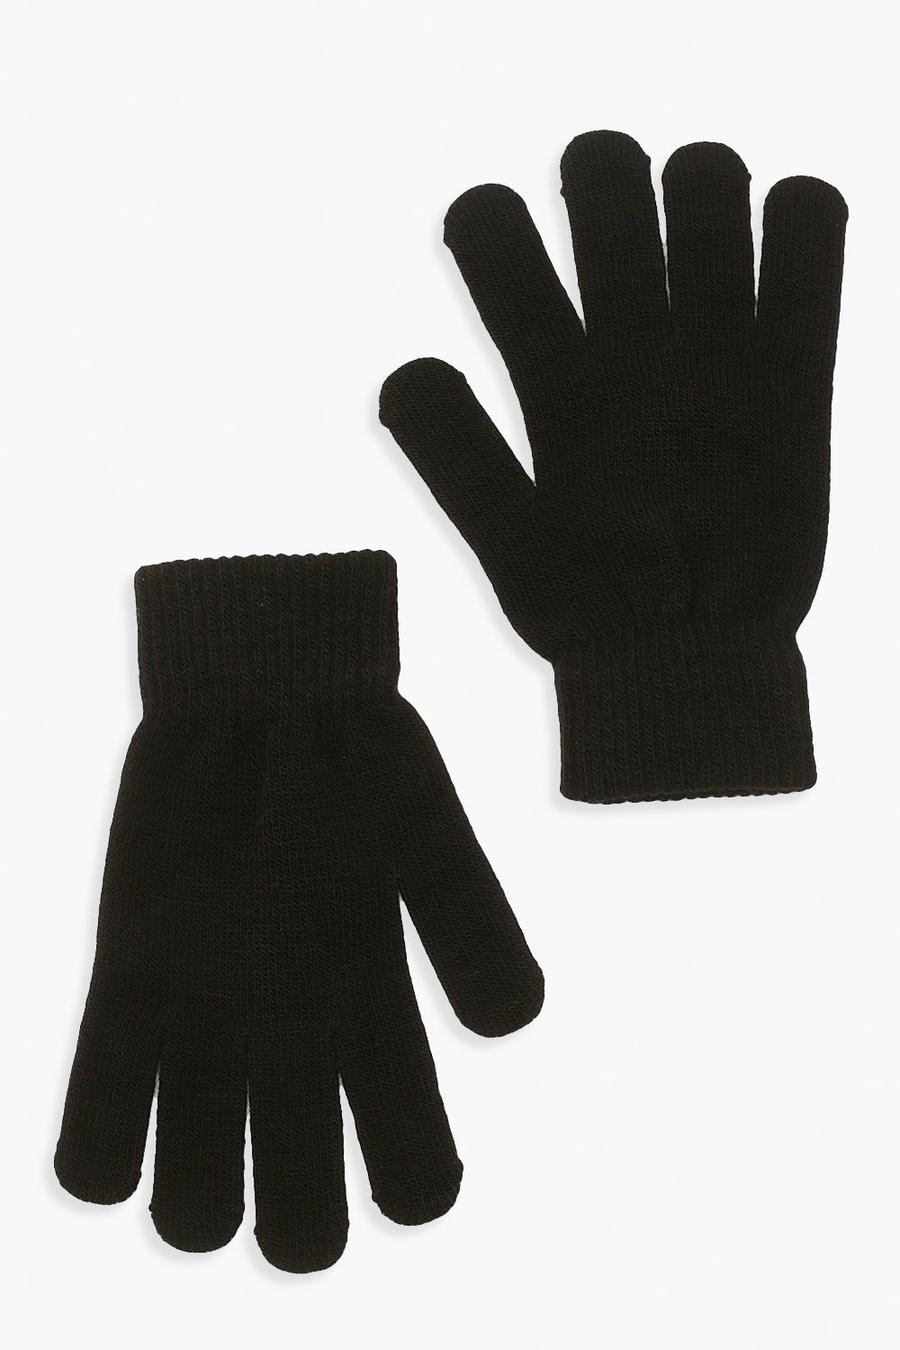 Black Magic Gloves